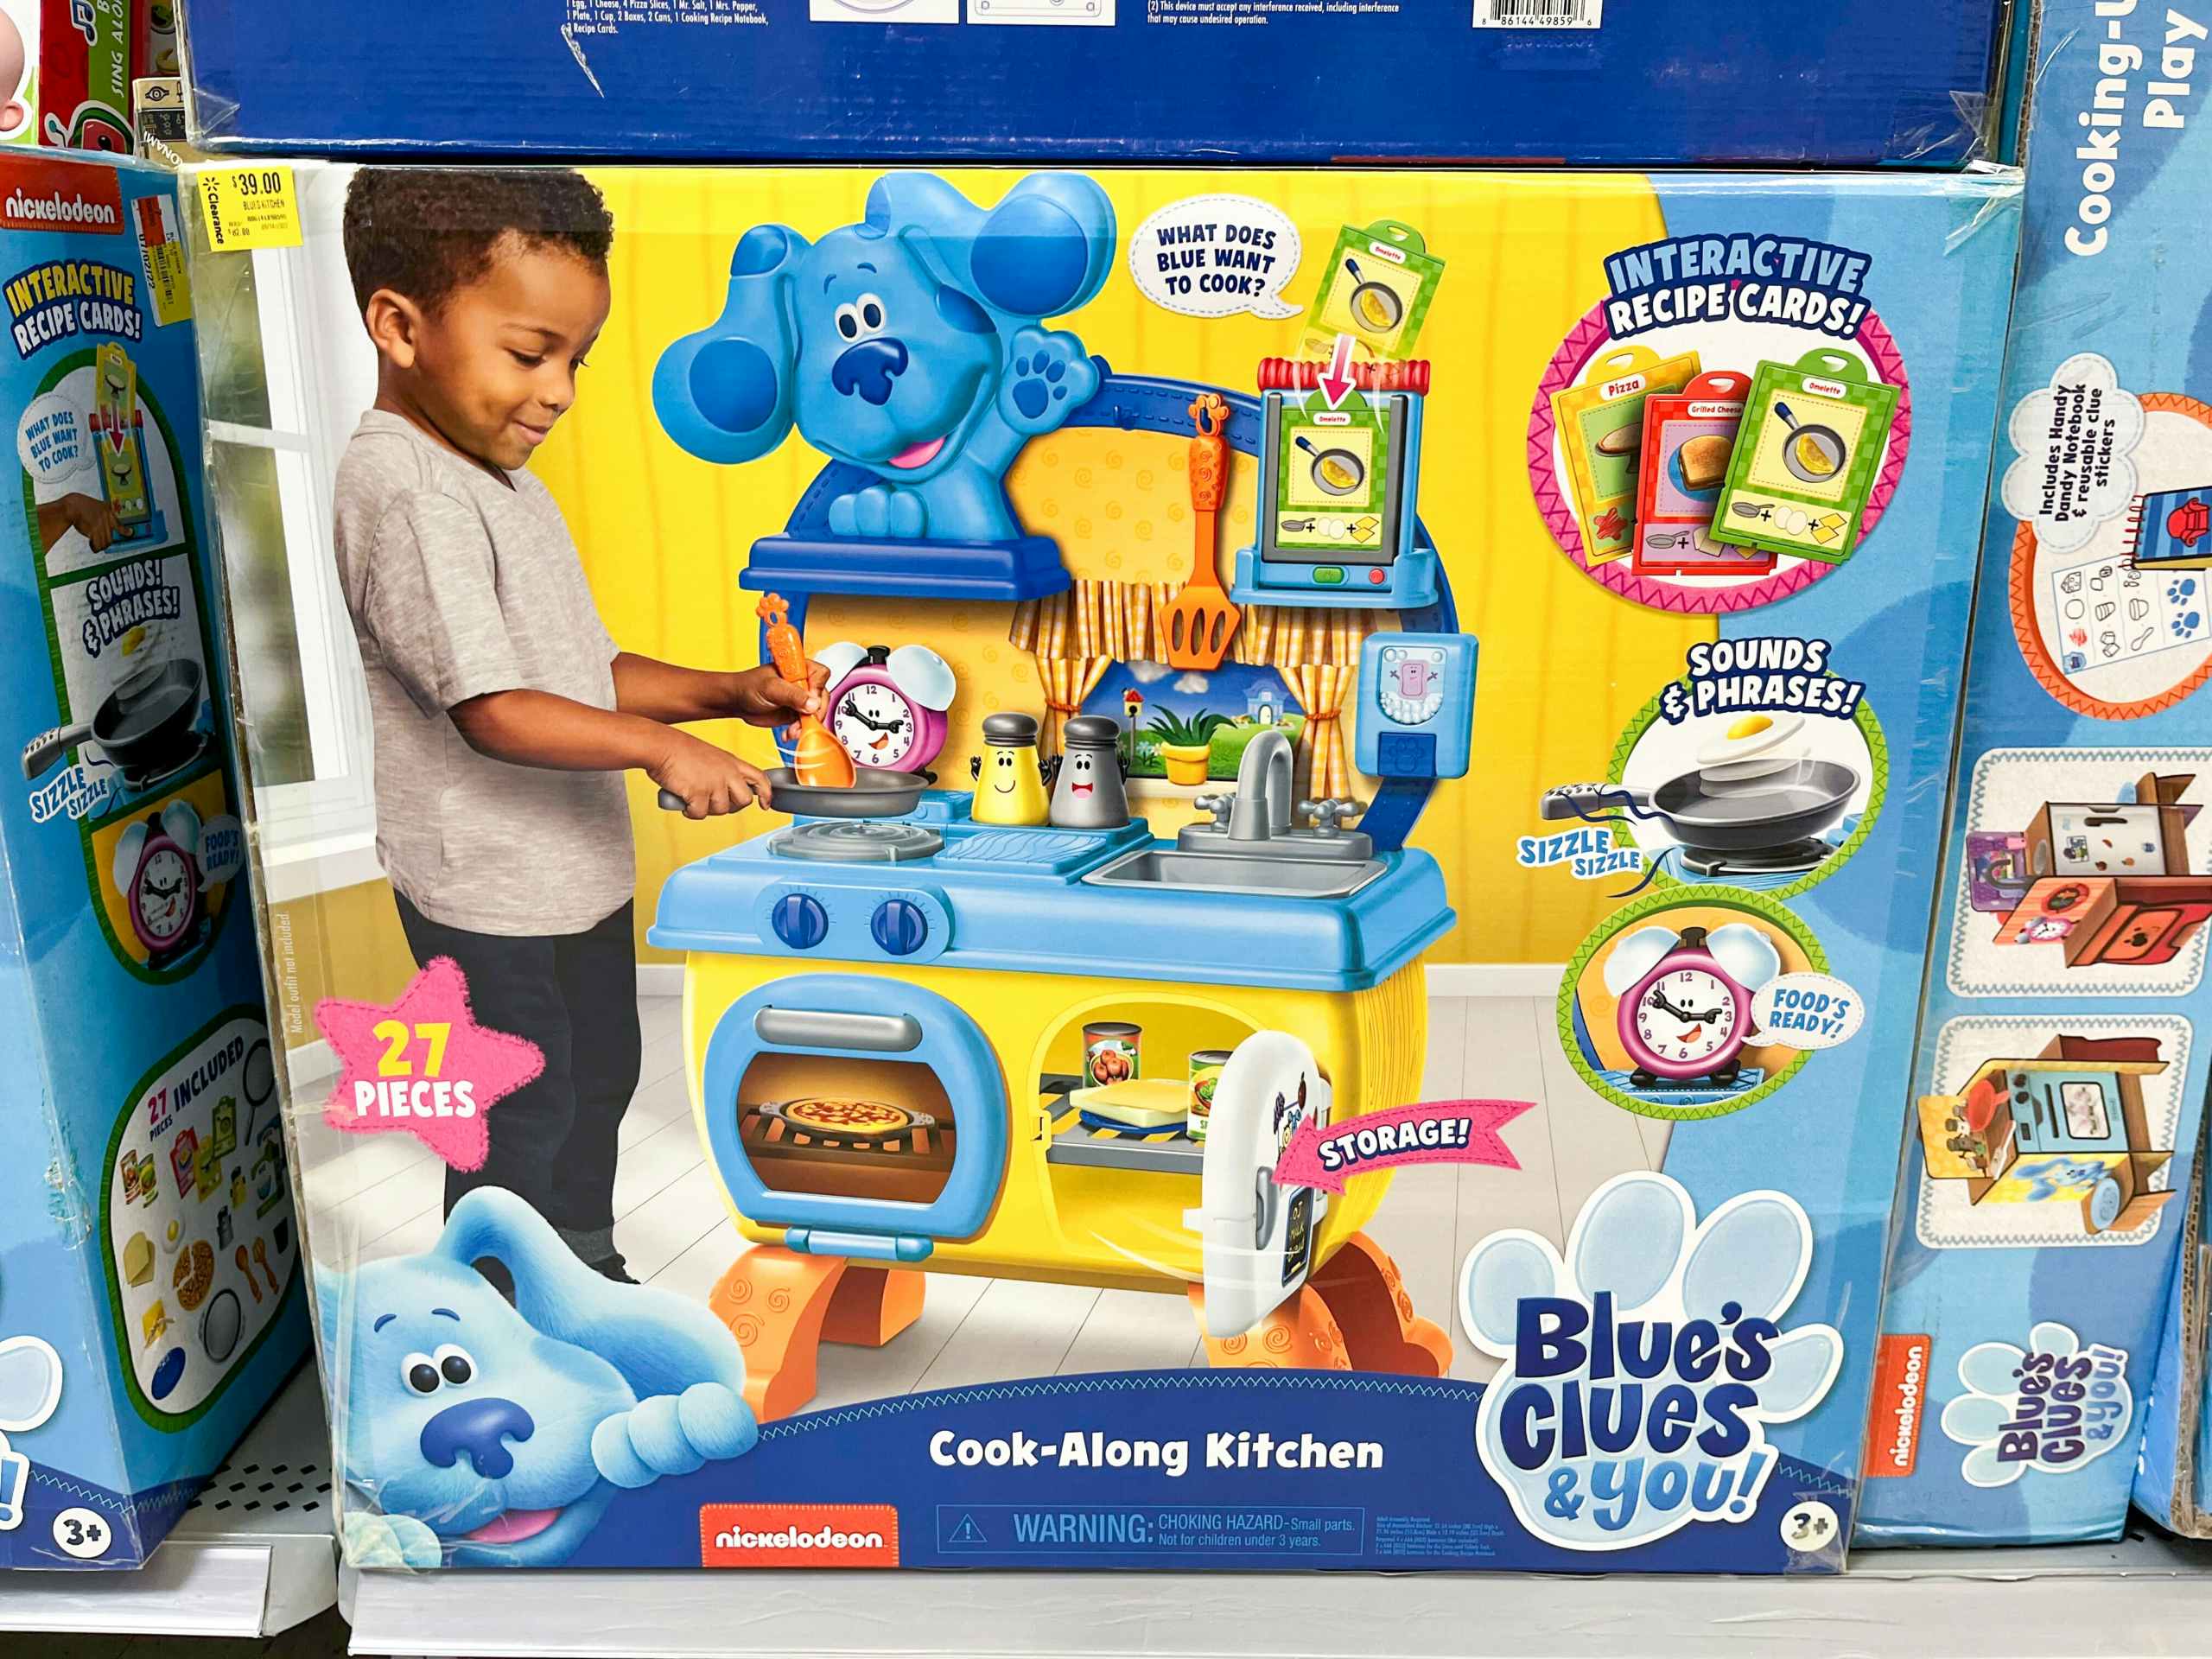 Blues Clues kitchen toy on shelf